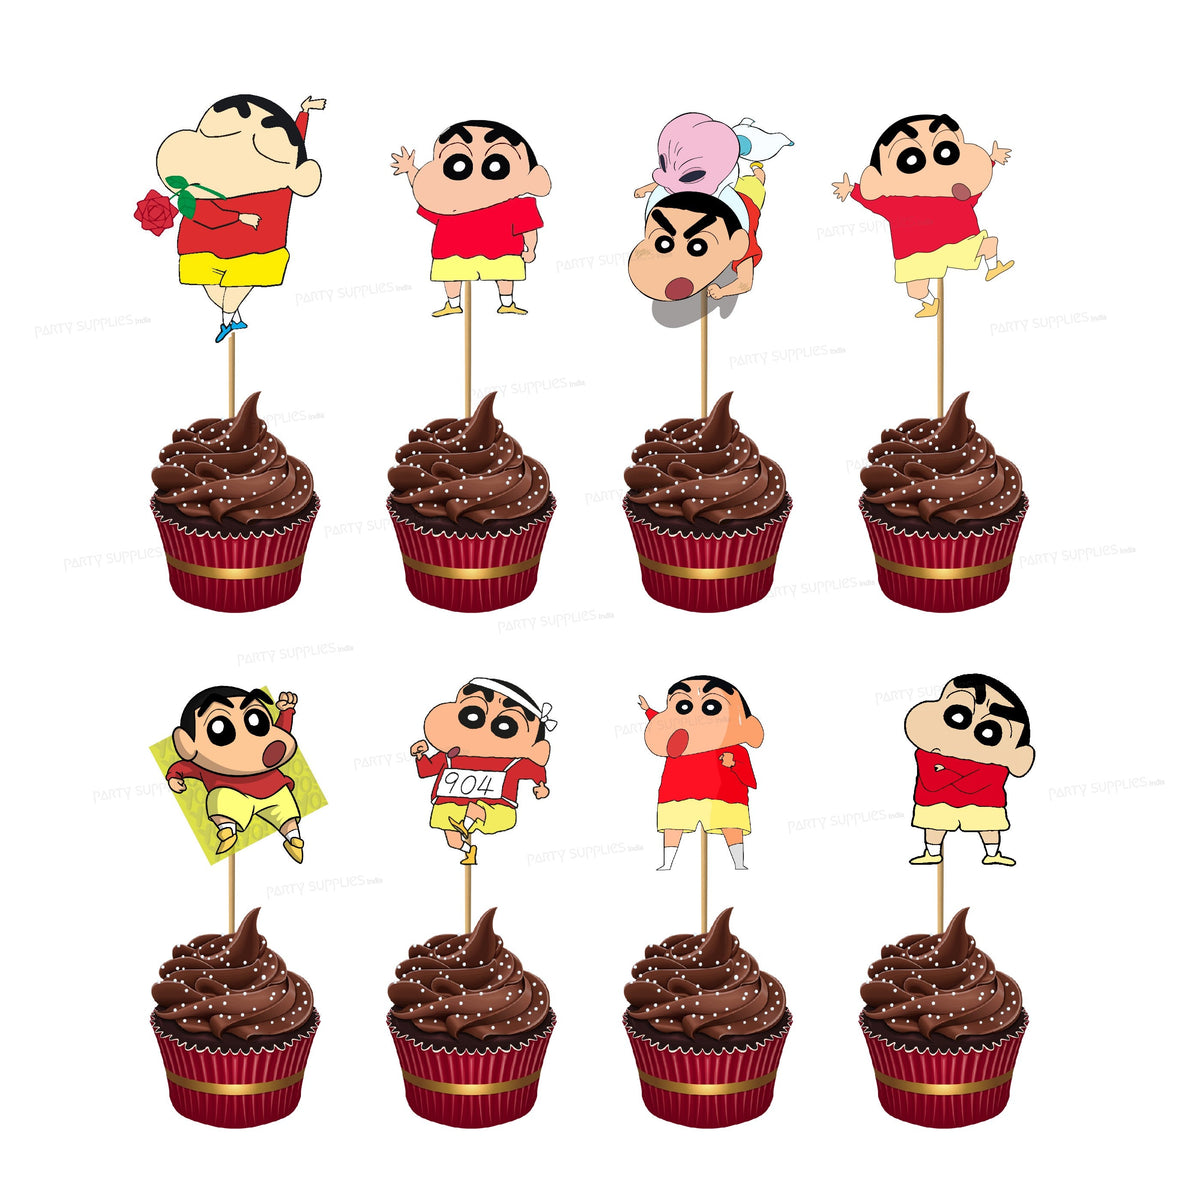 Shinchan Family Cake | Family cake, Cake, Cake designs for kids